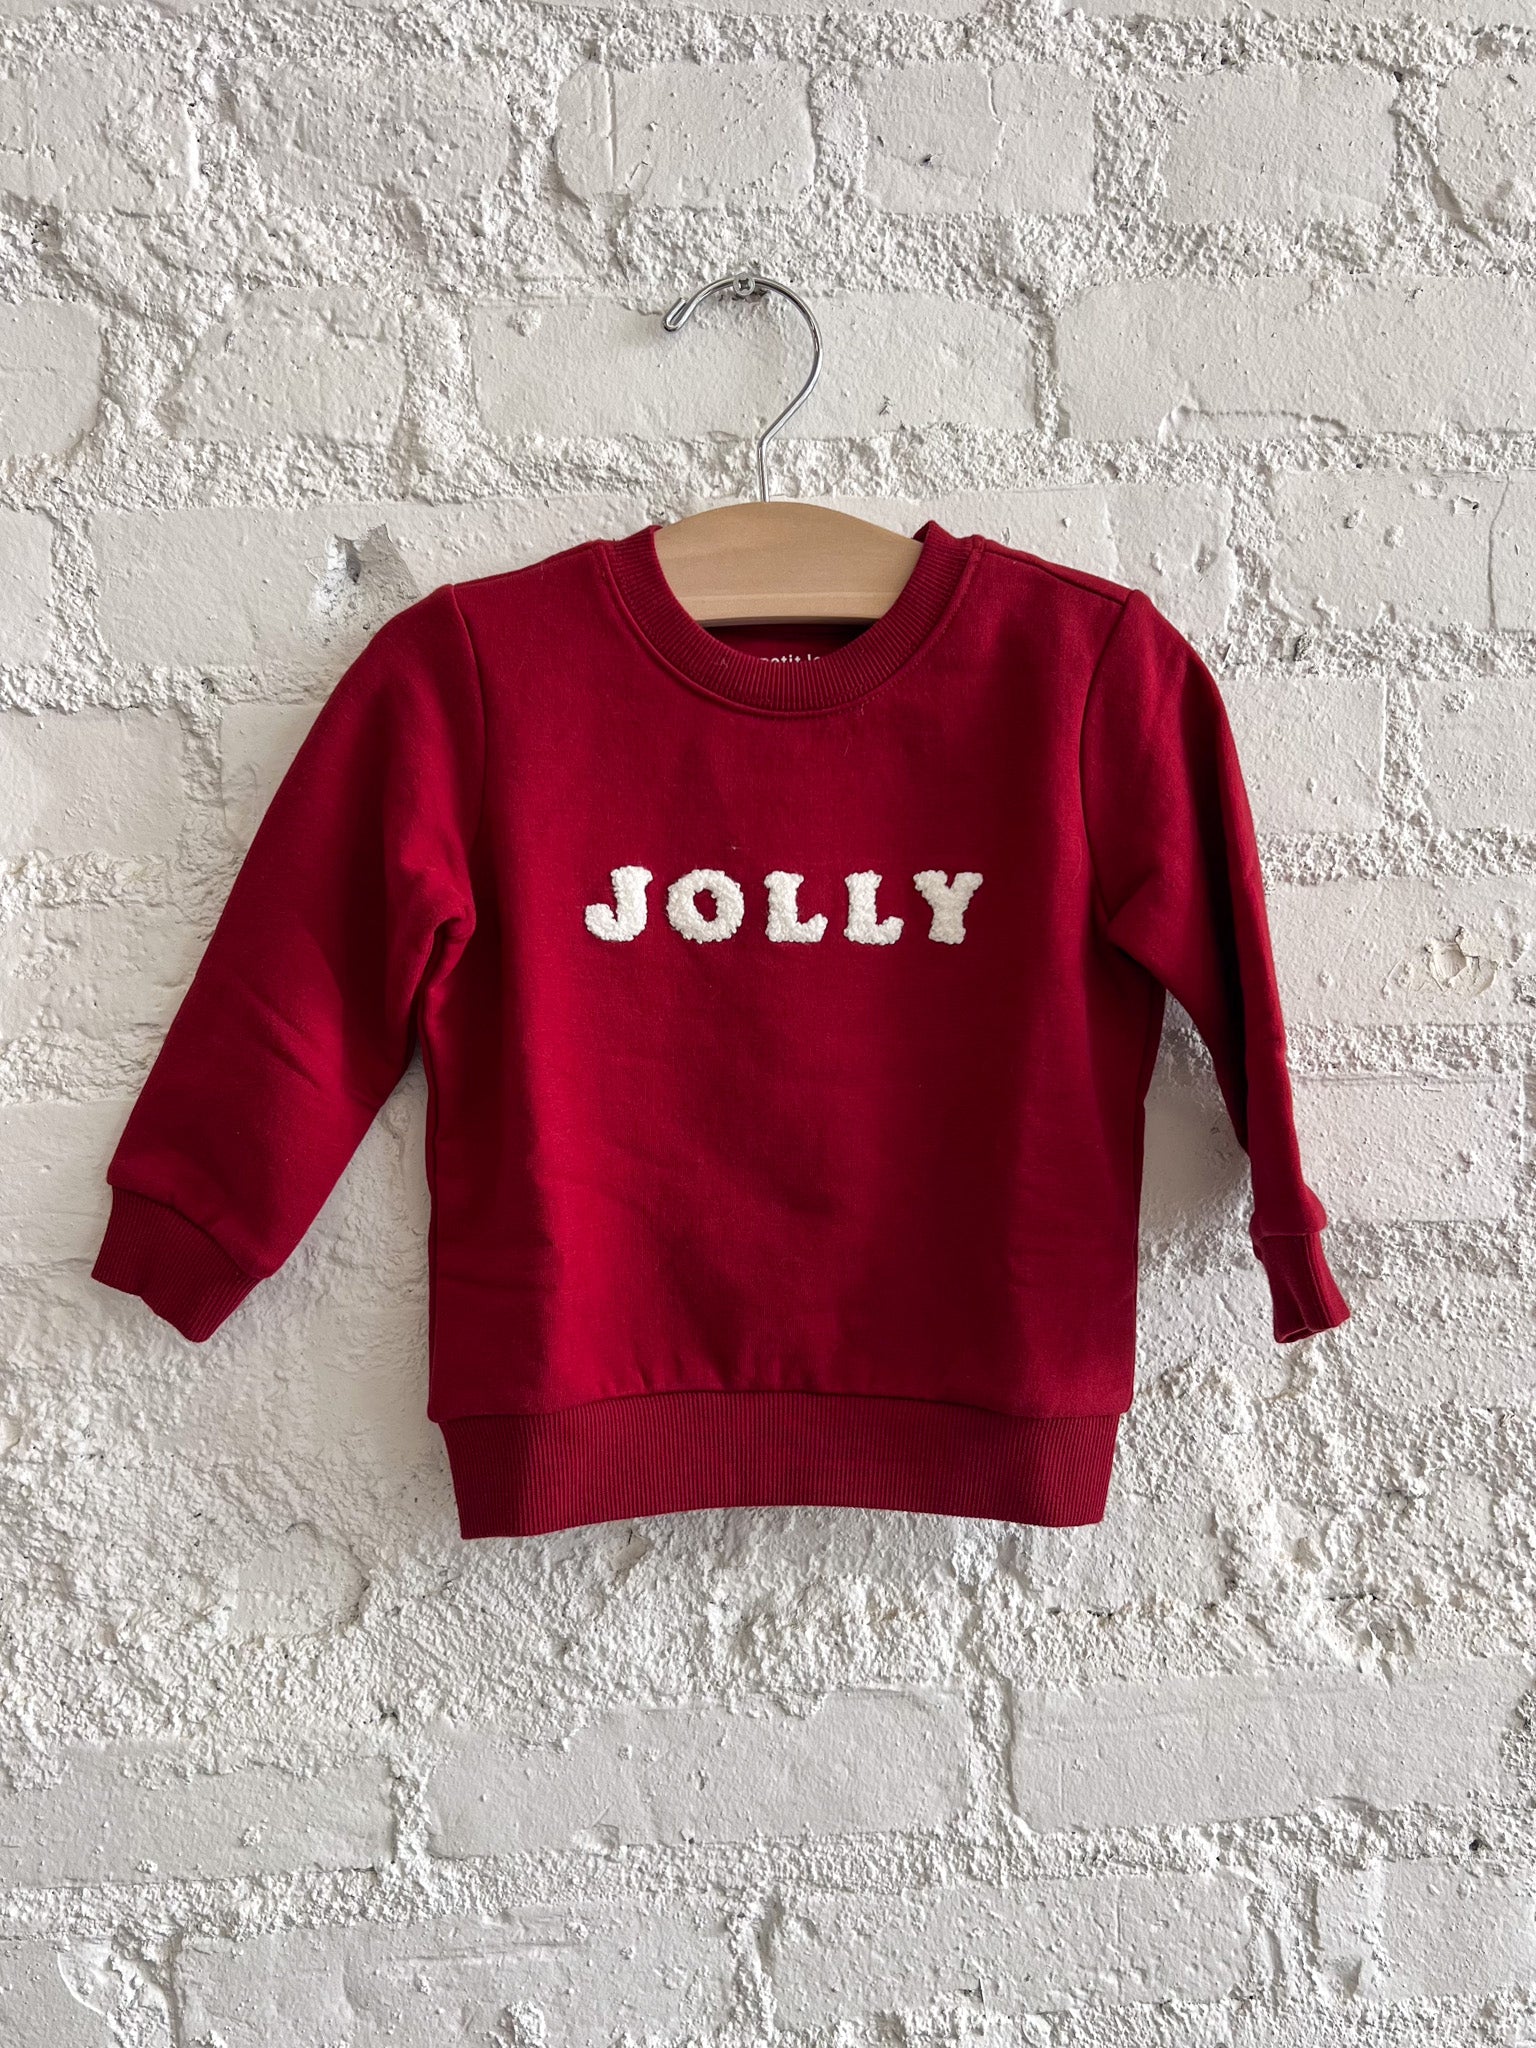 Jolly Crewneck Sweater